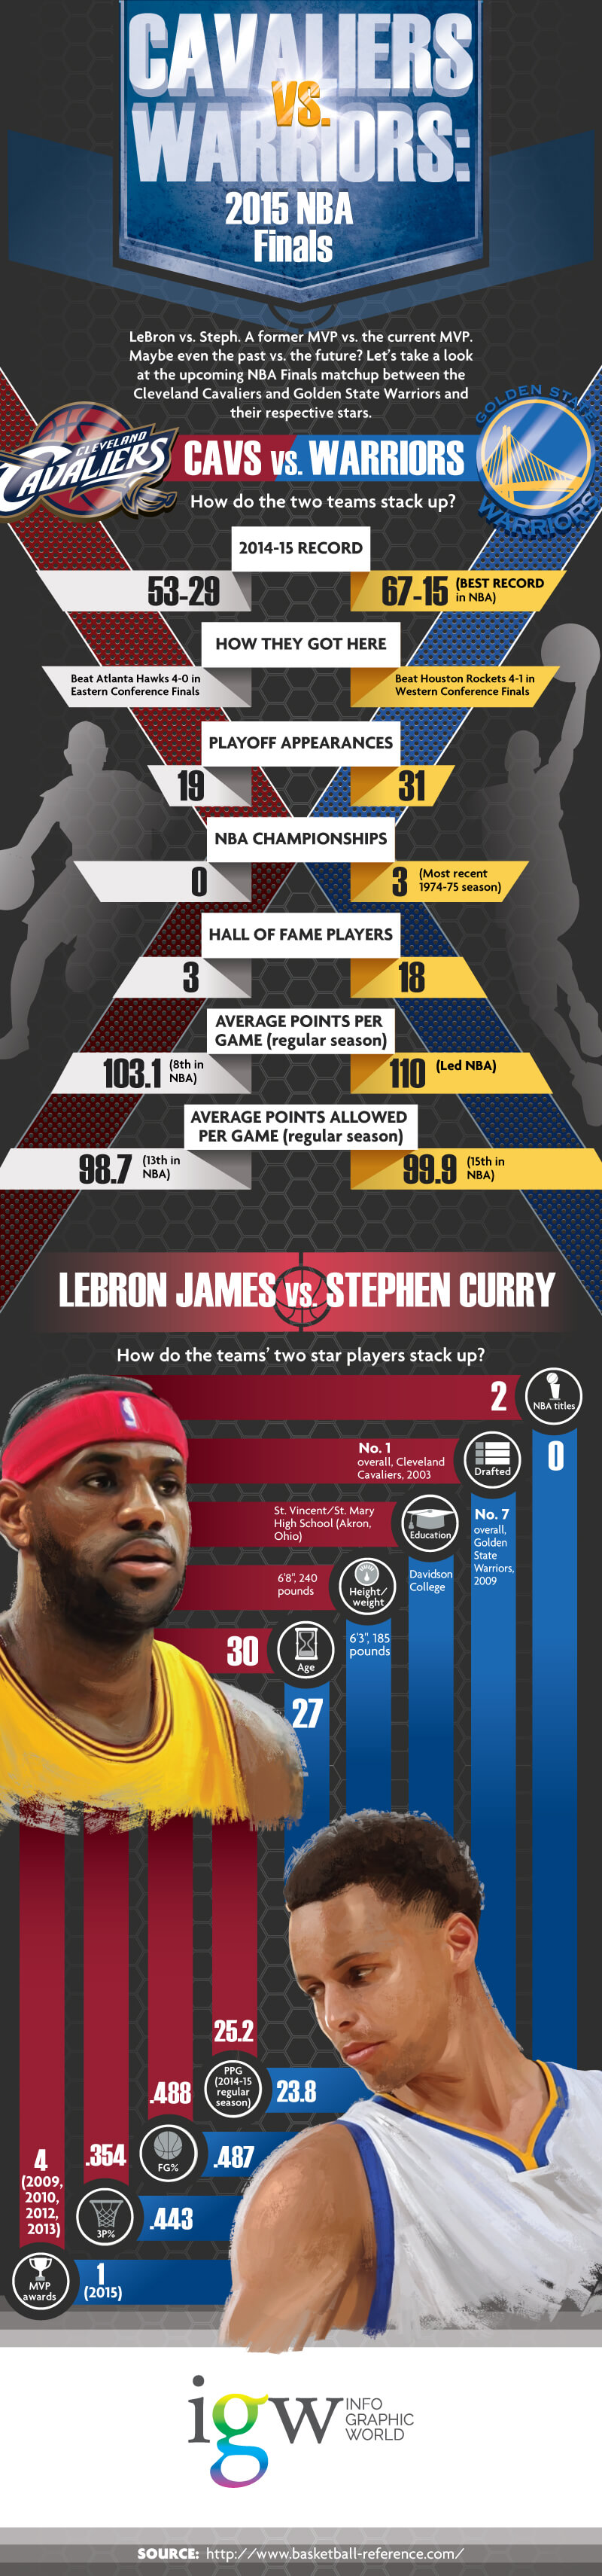 Cavaliers Vs. Warriors: 2015 NBA Finals